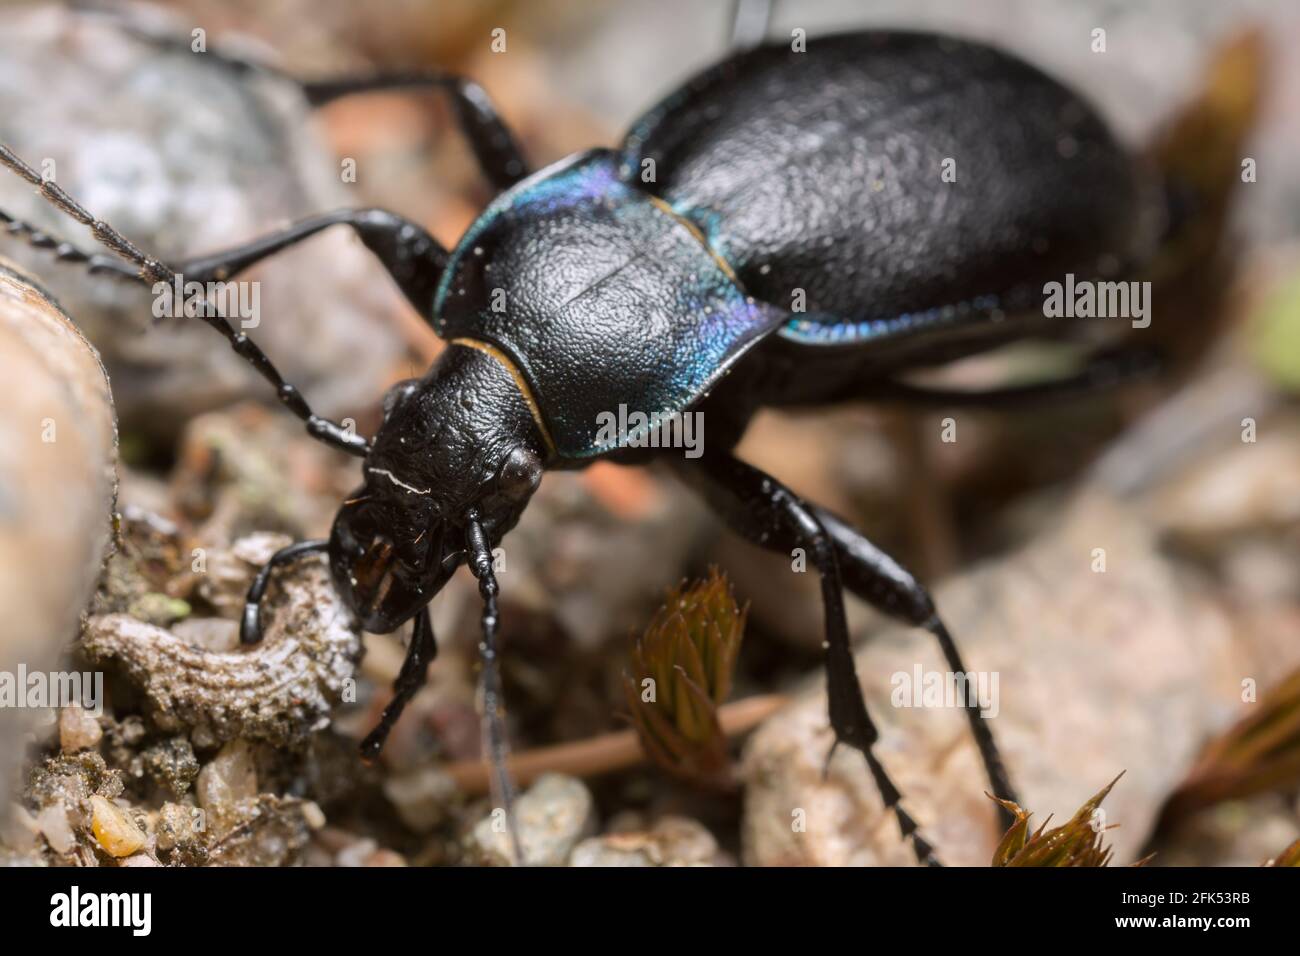 Massa viola beetle, Carabus tendente al violaceo Foto Stock